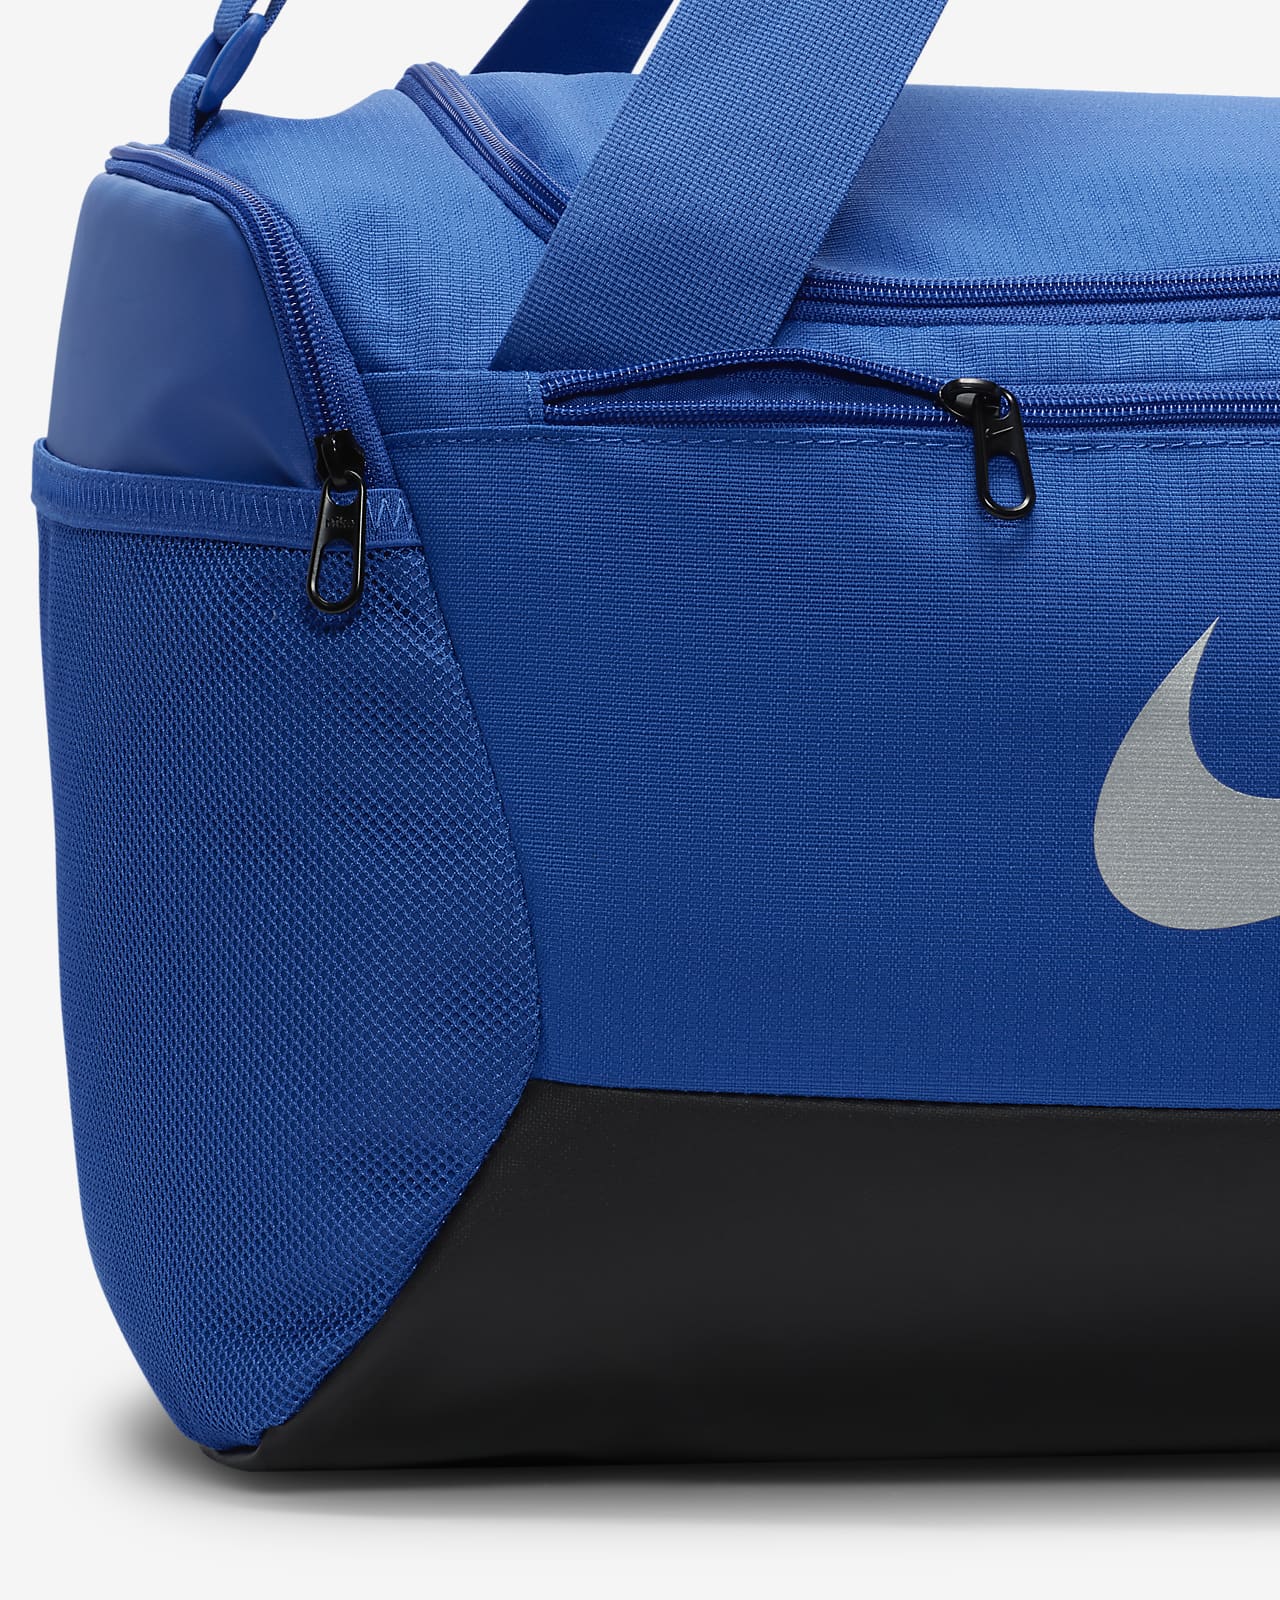 Brasilia 9.5 Training Duffel Bag (41L) from Nike